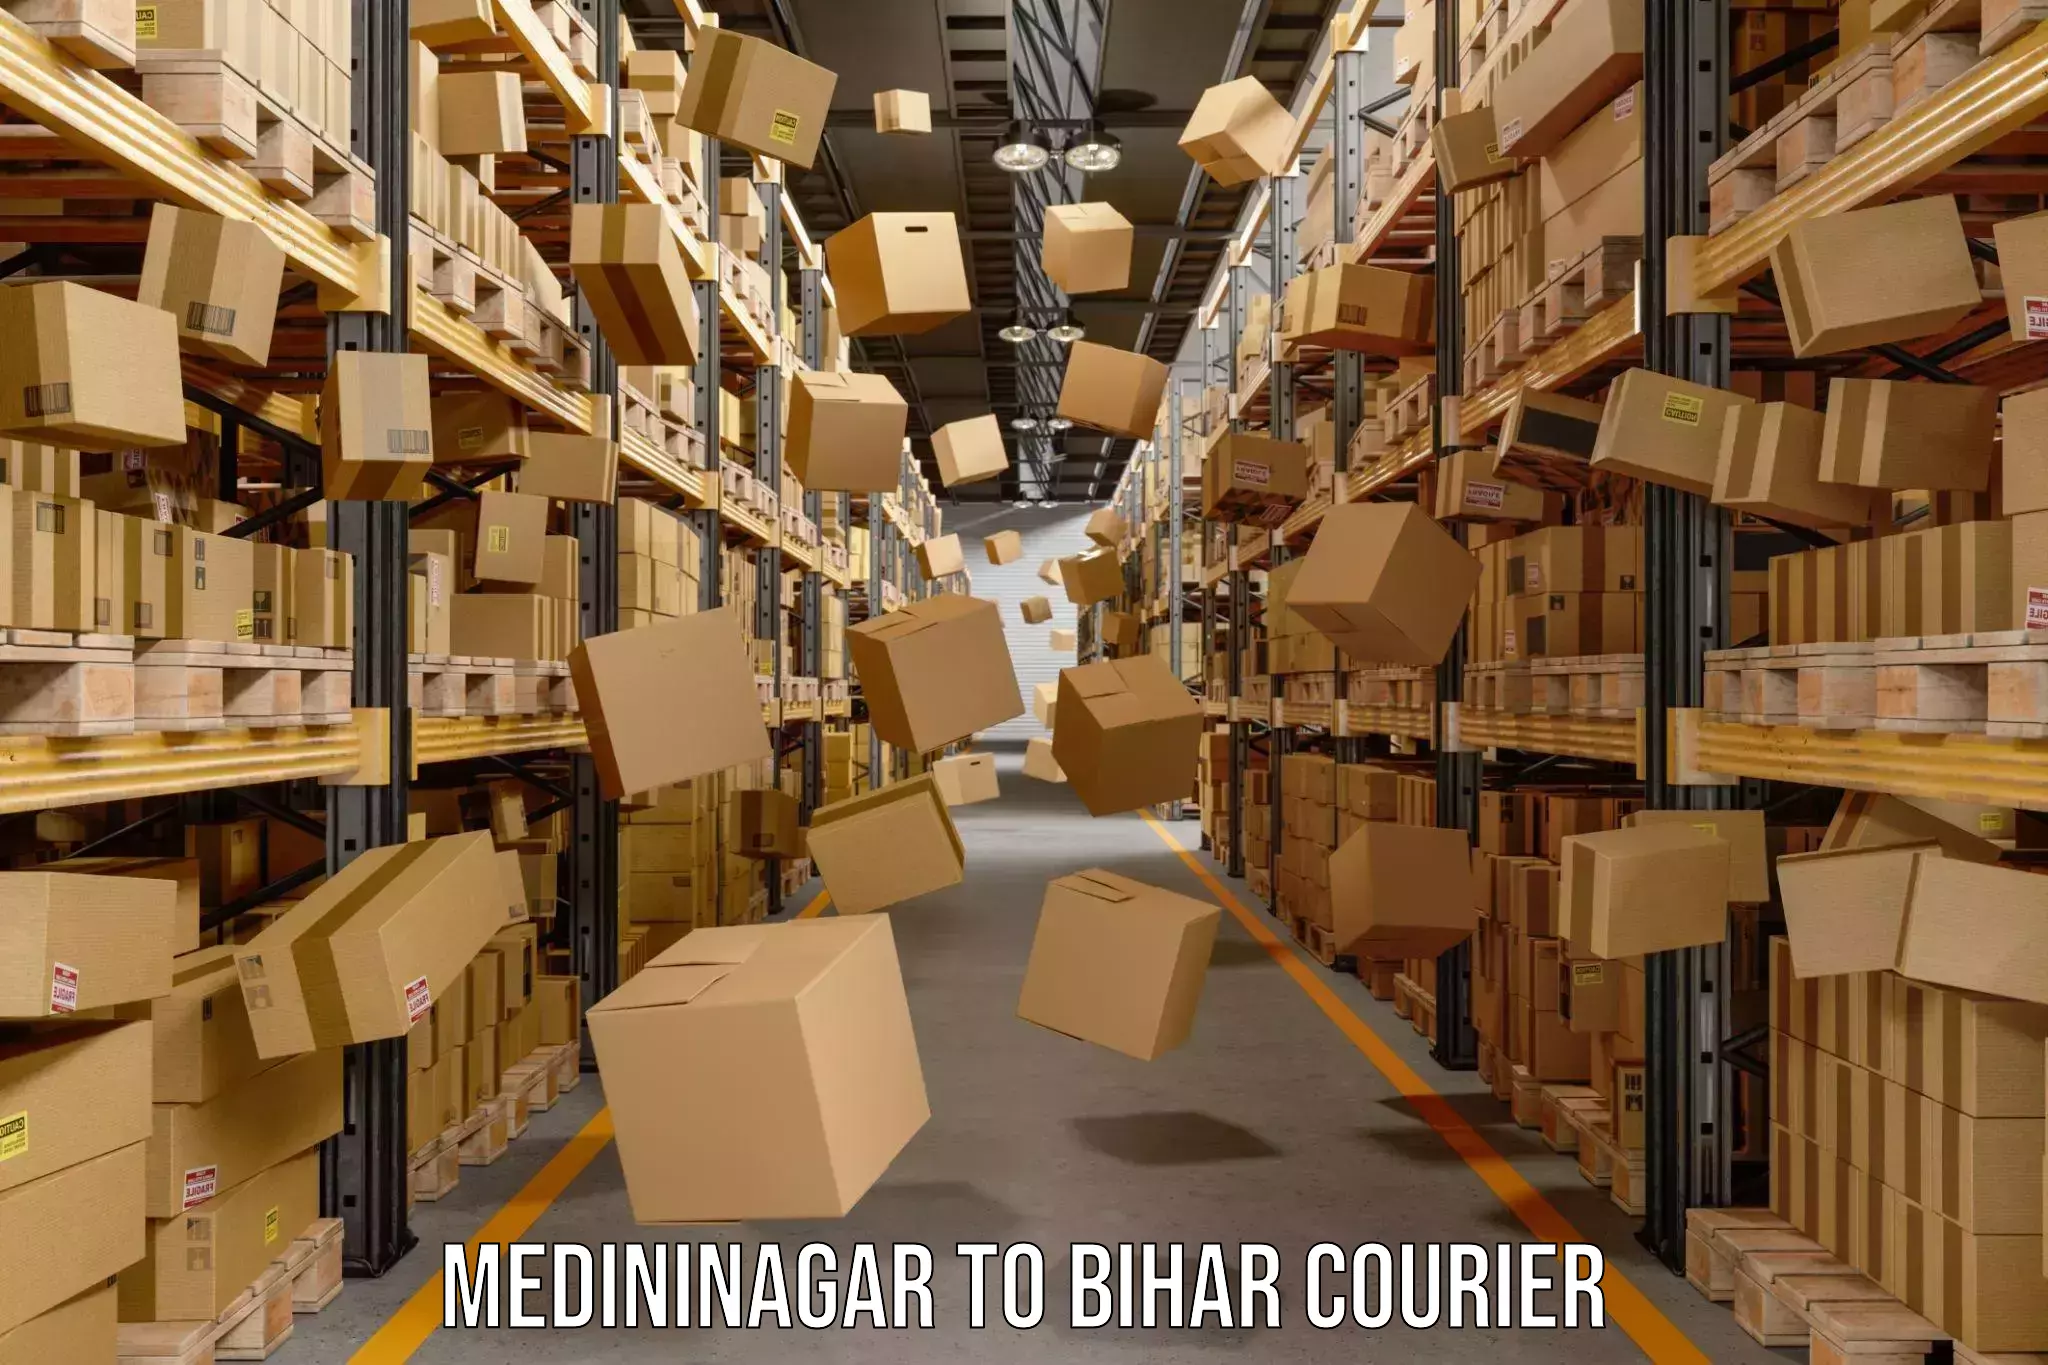 Courier service booking Medininagar to Piro